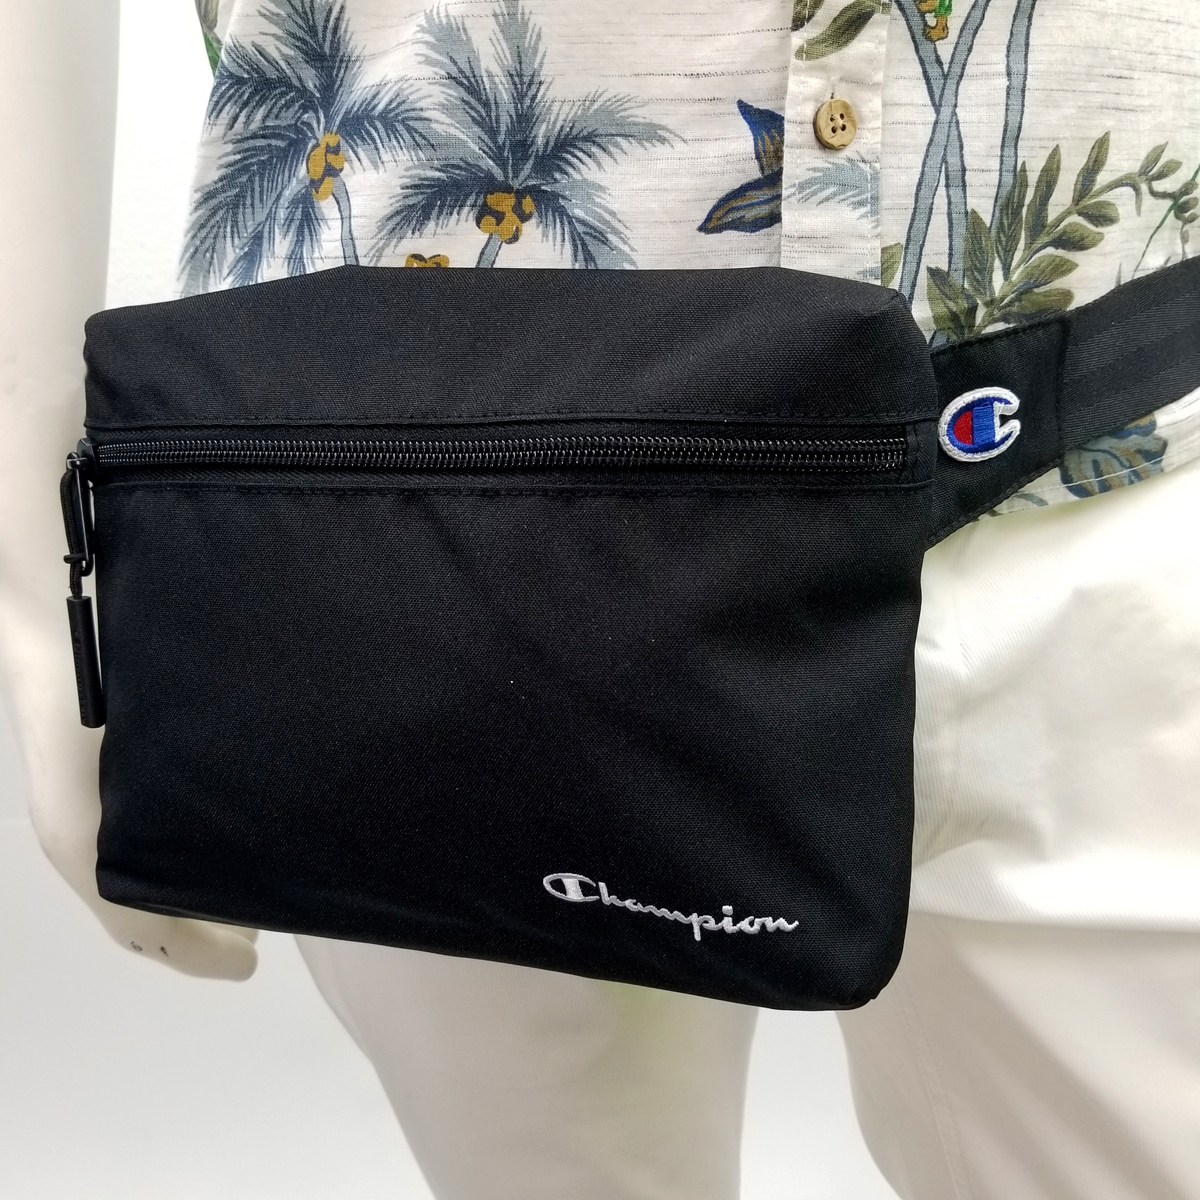 Nageslacht de wind is sterk Christchurch Champion Black Passport Waist Bag in CA, NY - Moda Italy Fashion